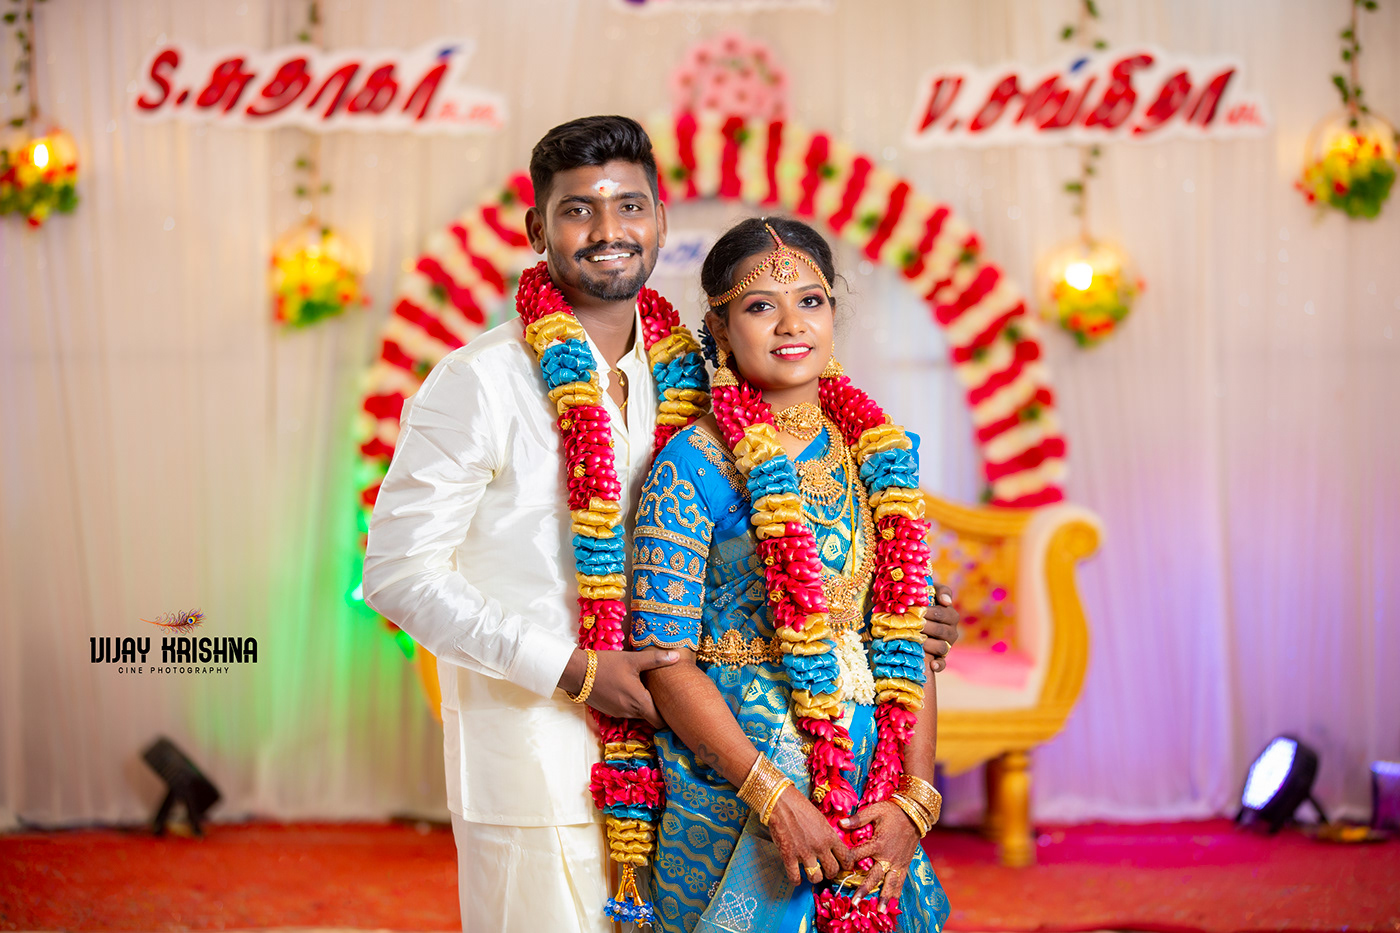 Wedding Photography wedding portrait prewedding photography portrait photography retouch Tamil wedding indian wedding photography portfolio Tamilnadu wedding traditional wedding